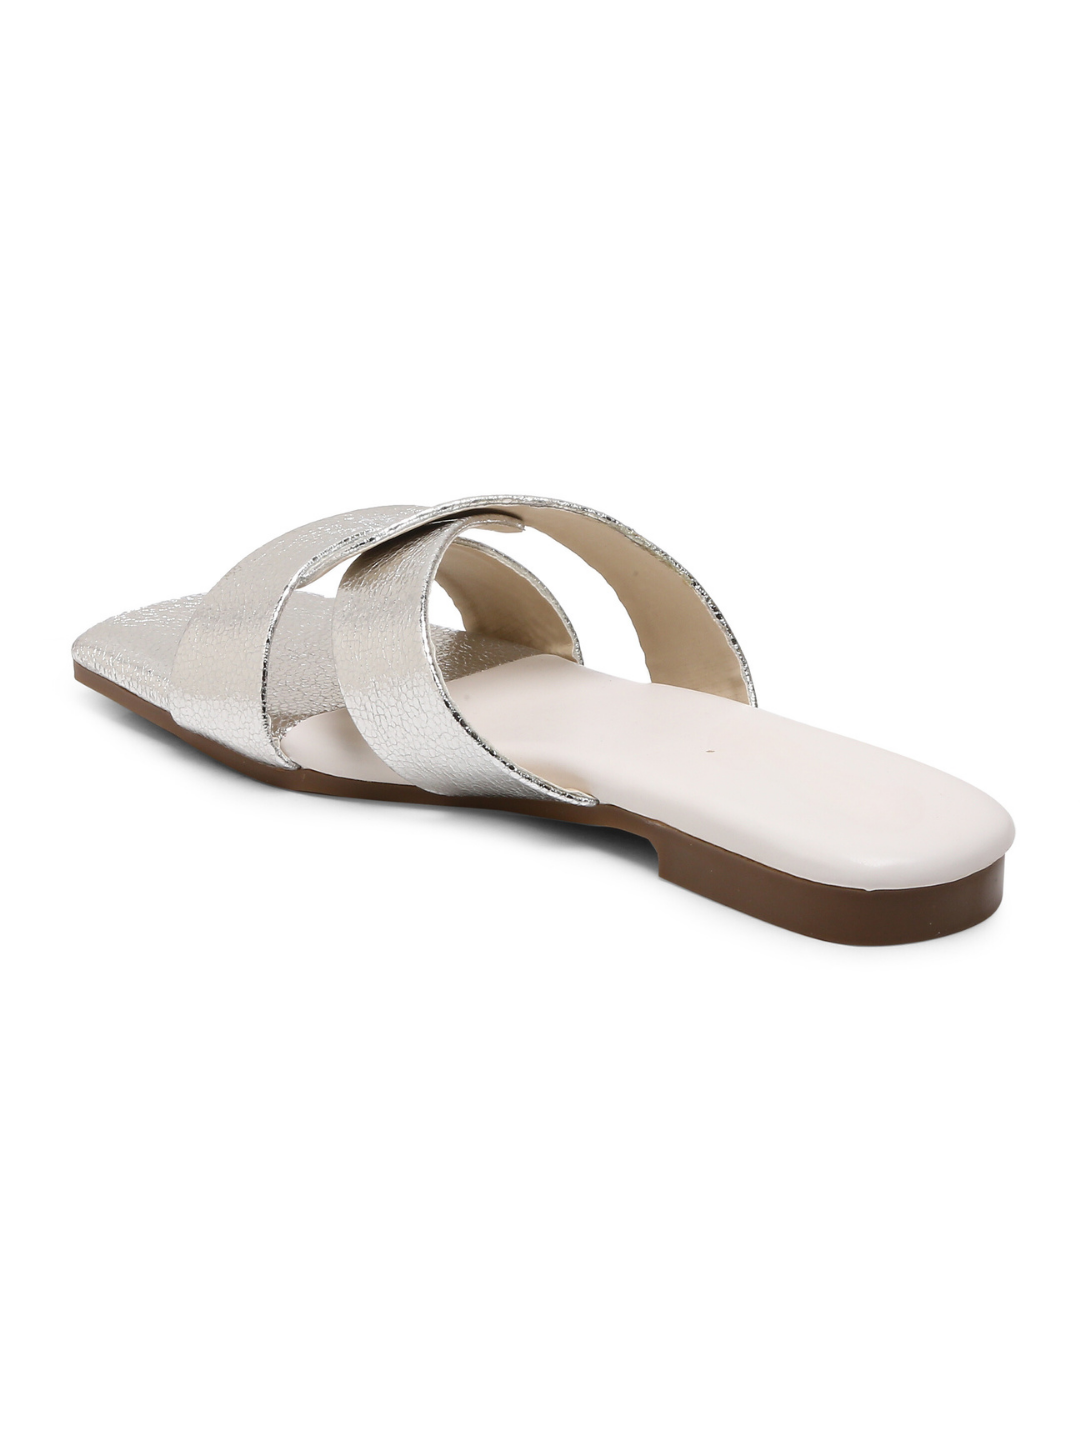 GNIST Silver Flat Sandal